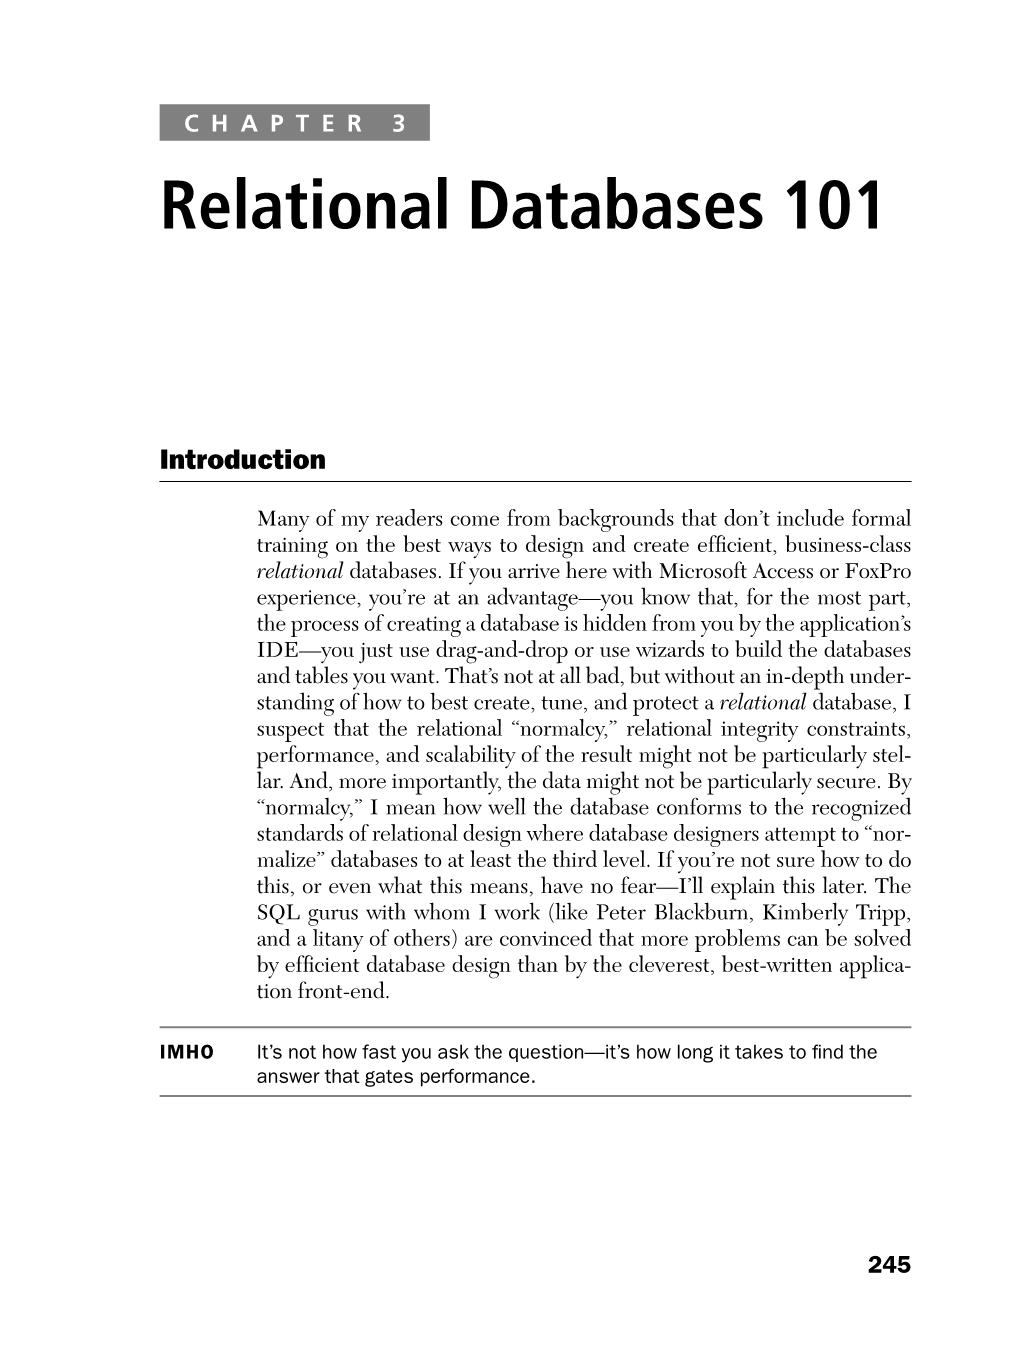 Relational Databases 101